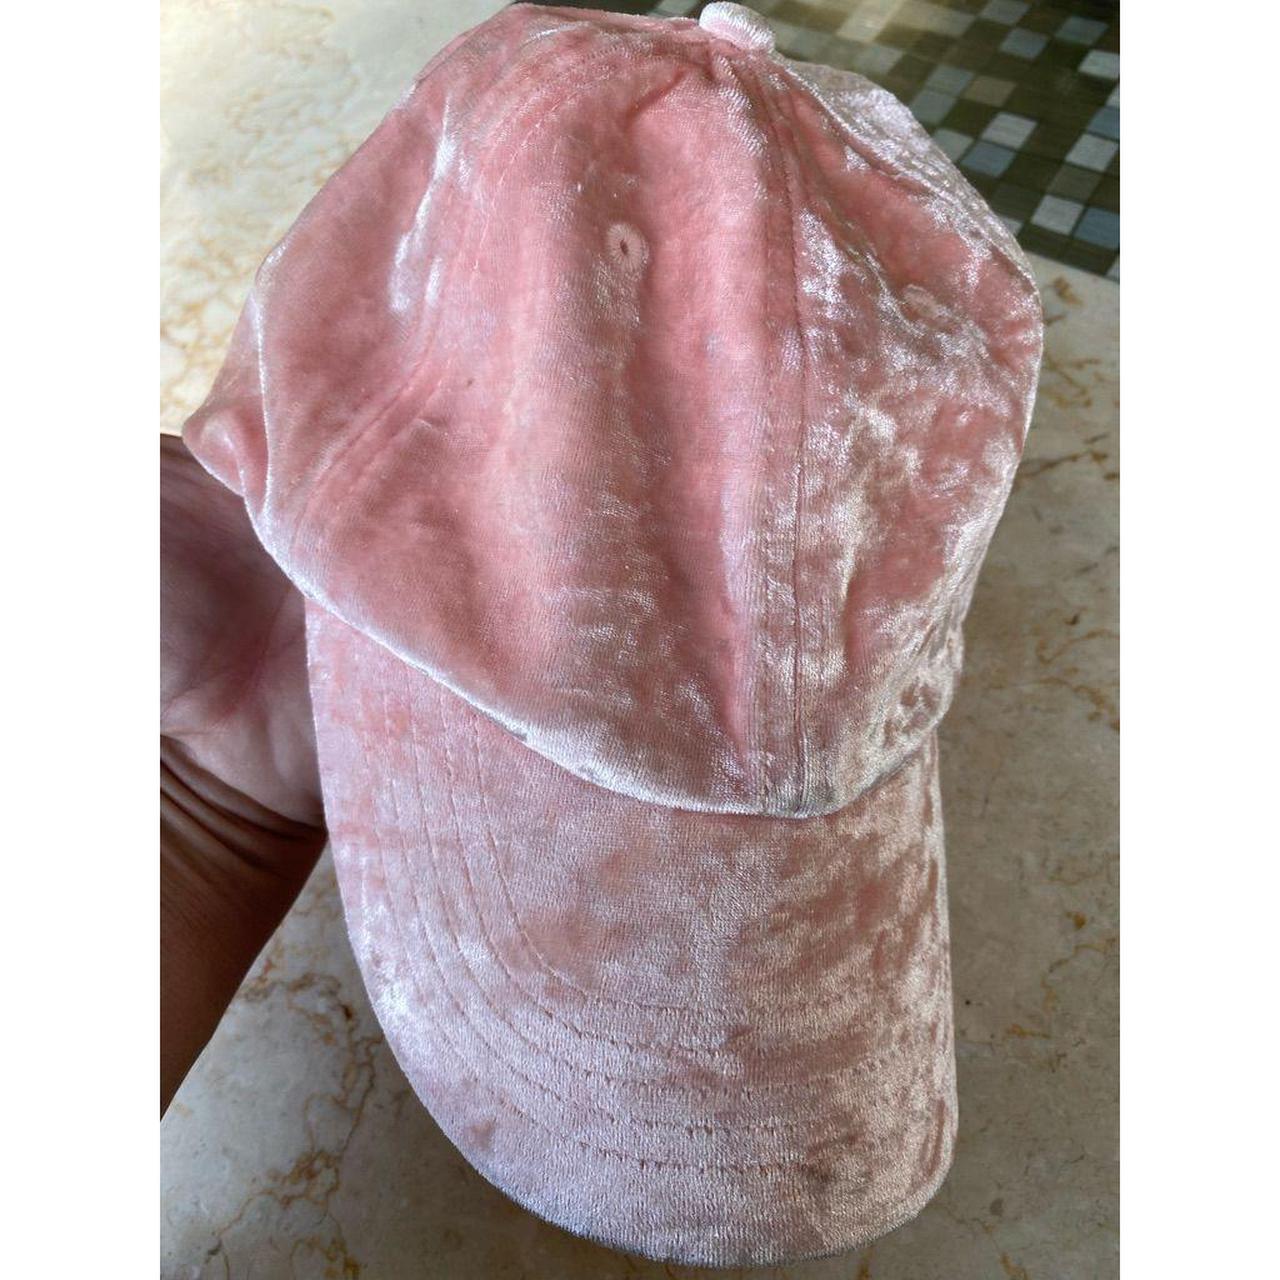 Product Image 2 - Pink velvet hat - lightly